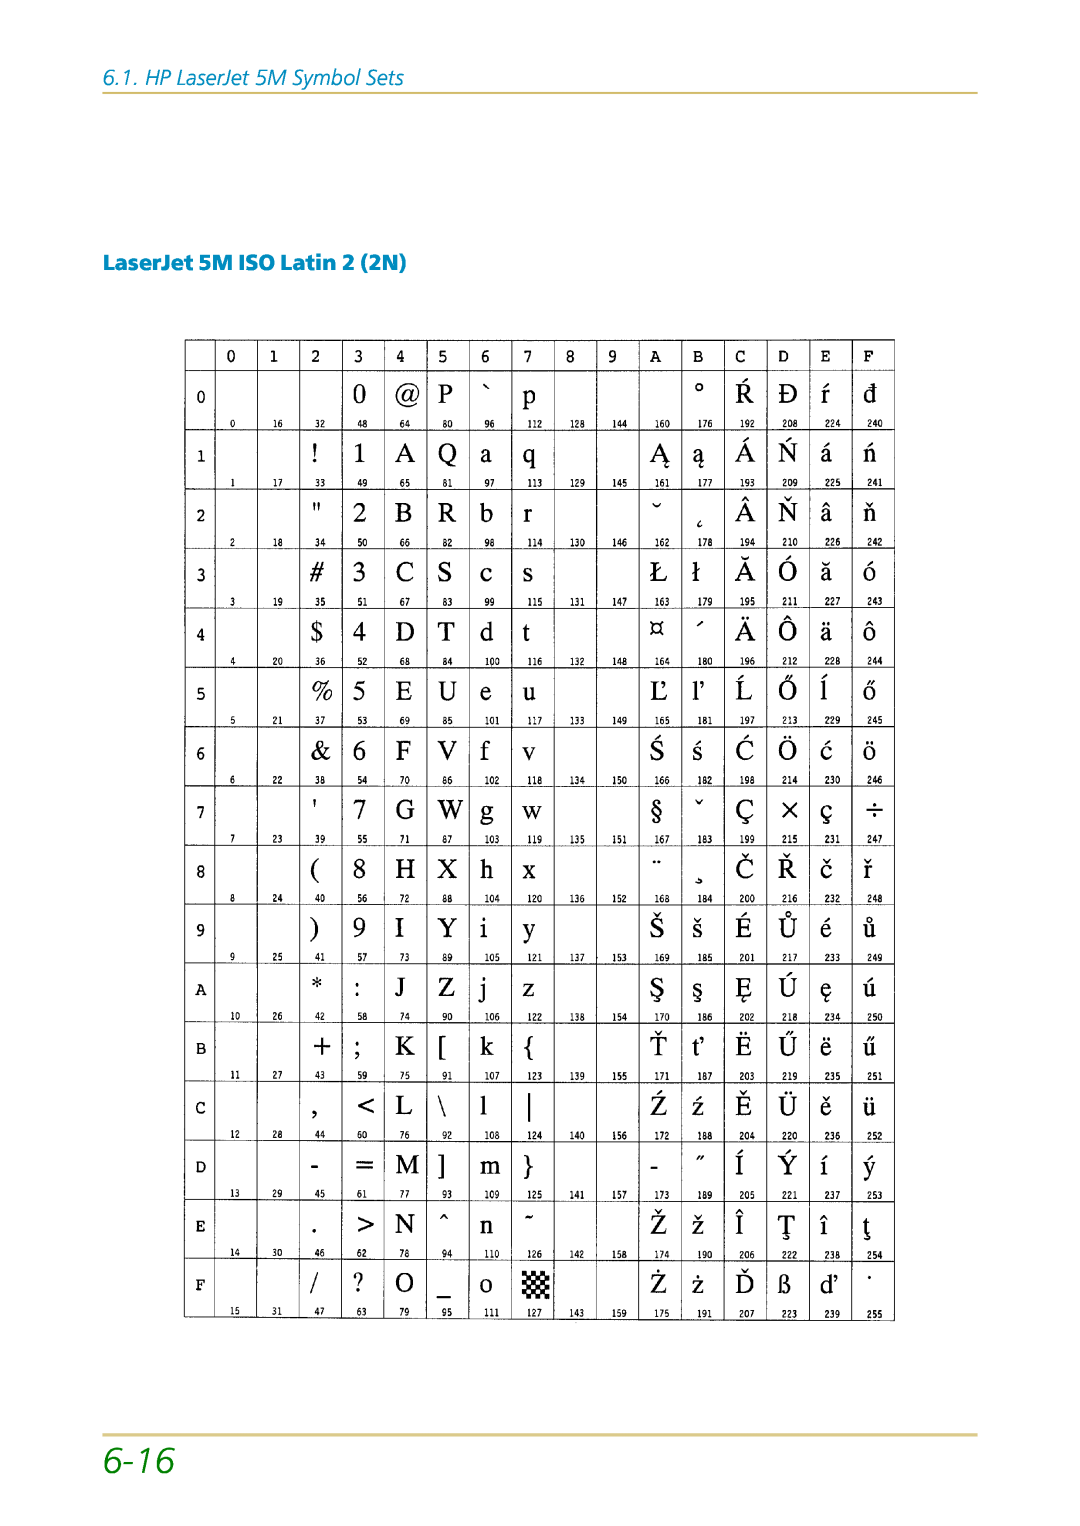 Kyocera FS-1700 user manual 6-16, HP LaserJet 5M Symbol Sets, LaserJet 5M ISO Latin 2 2N 